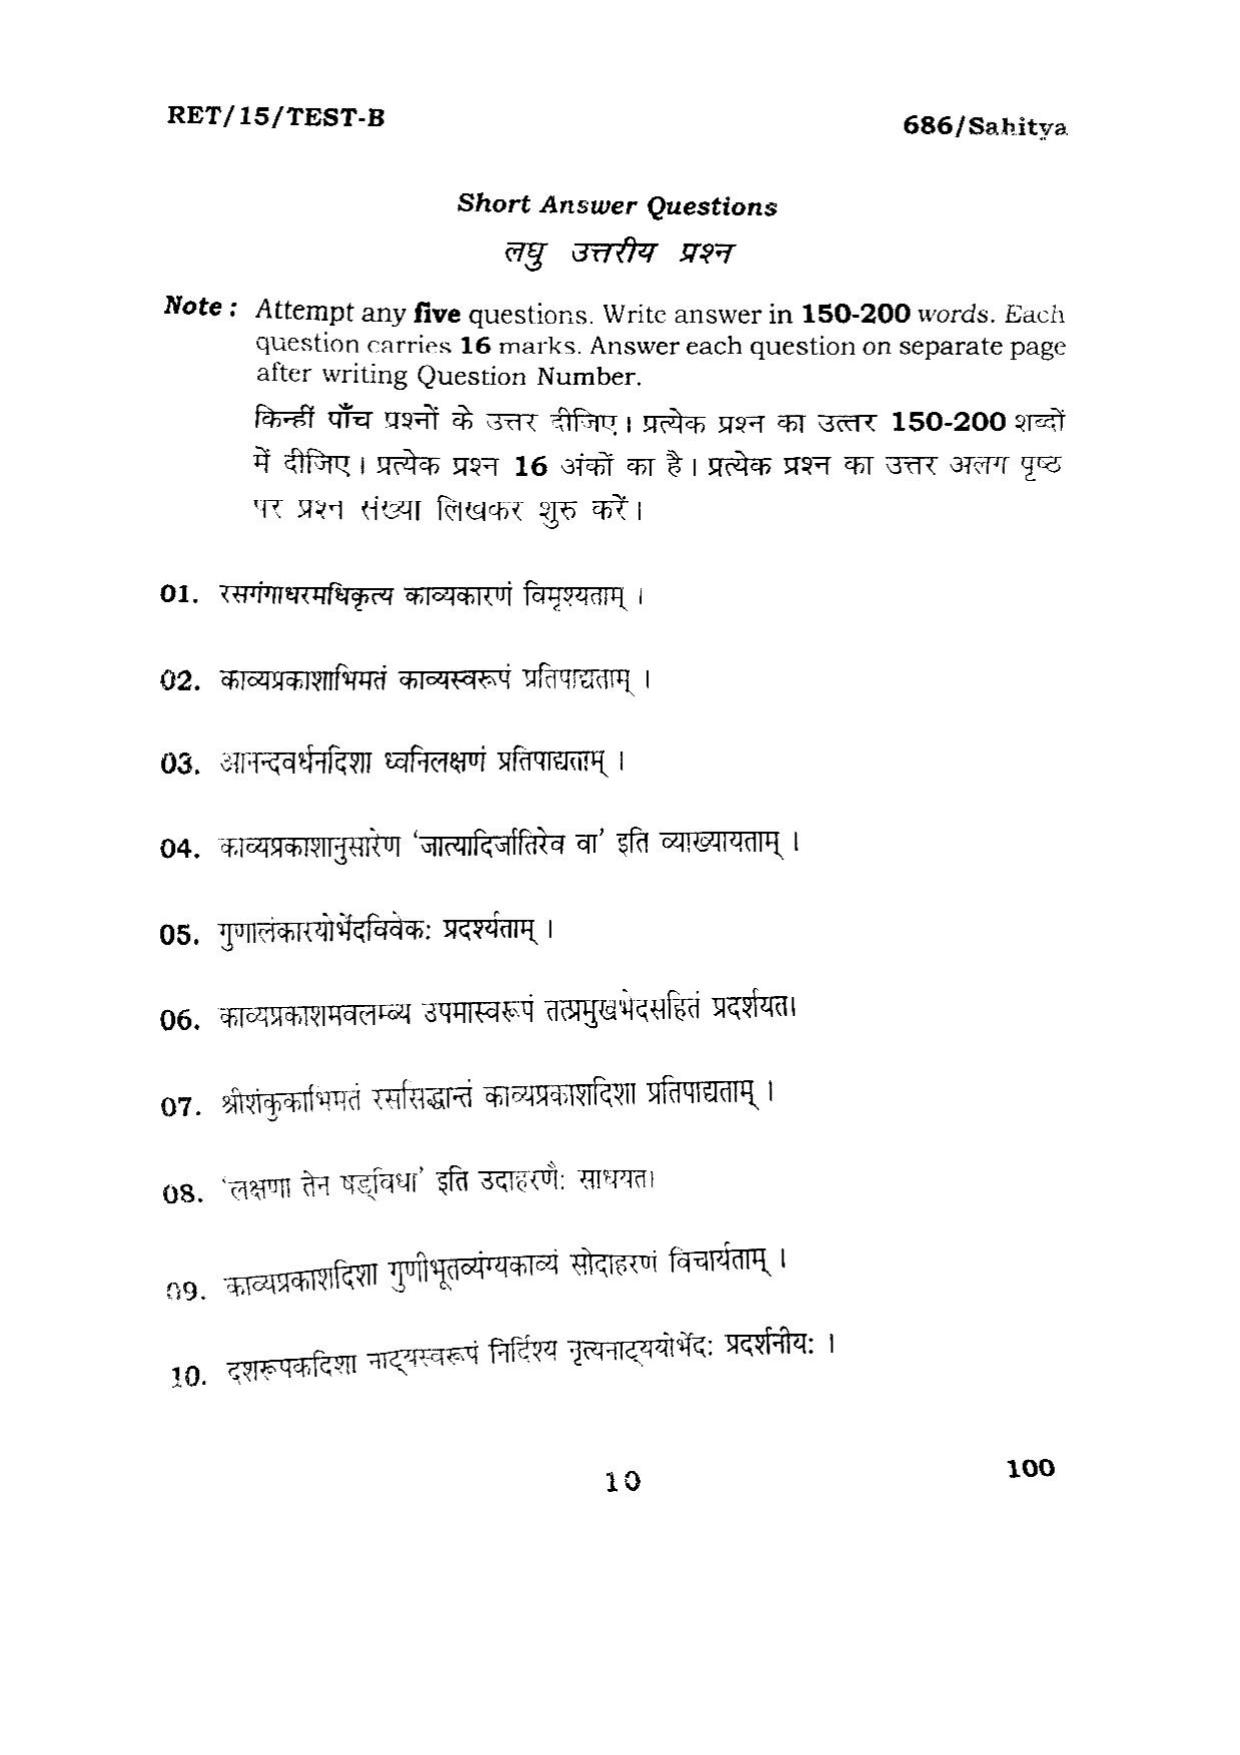 BHU RET SAHITYA 2015 Question Paper - Page 10